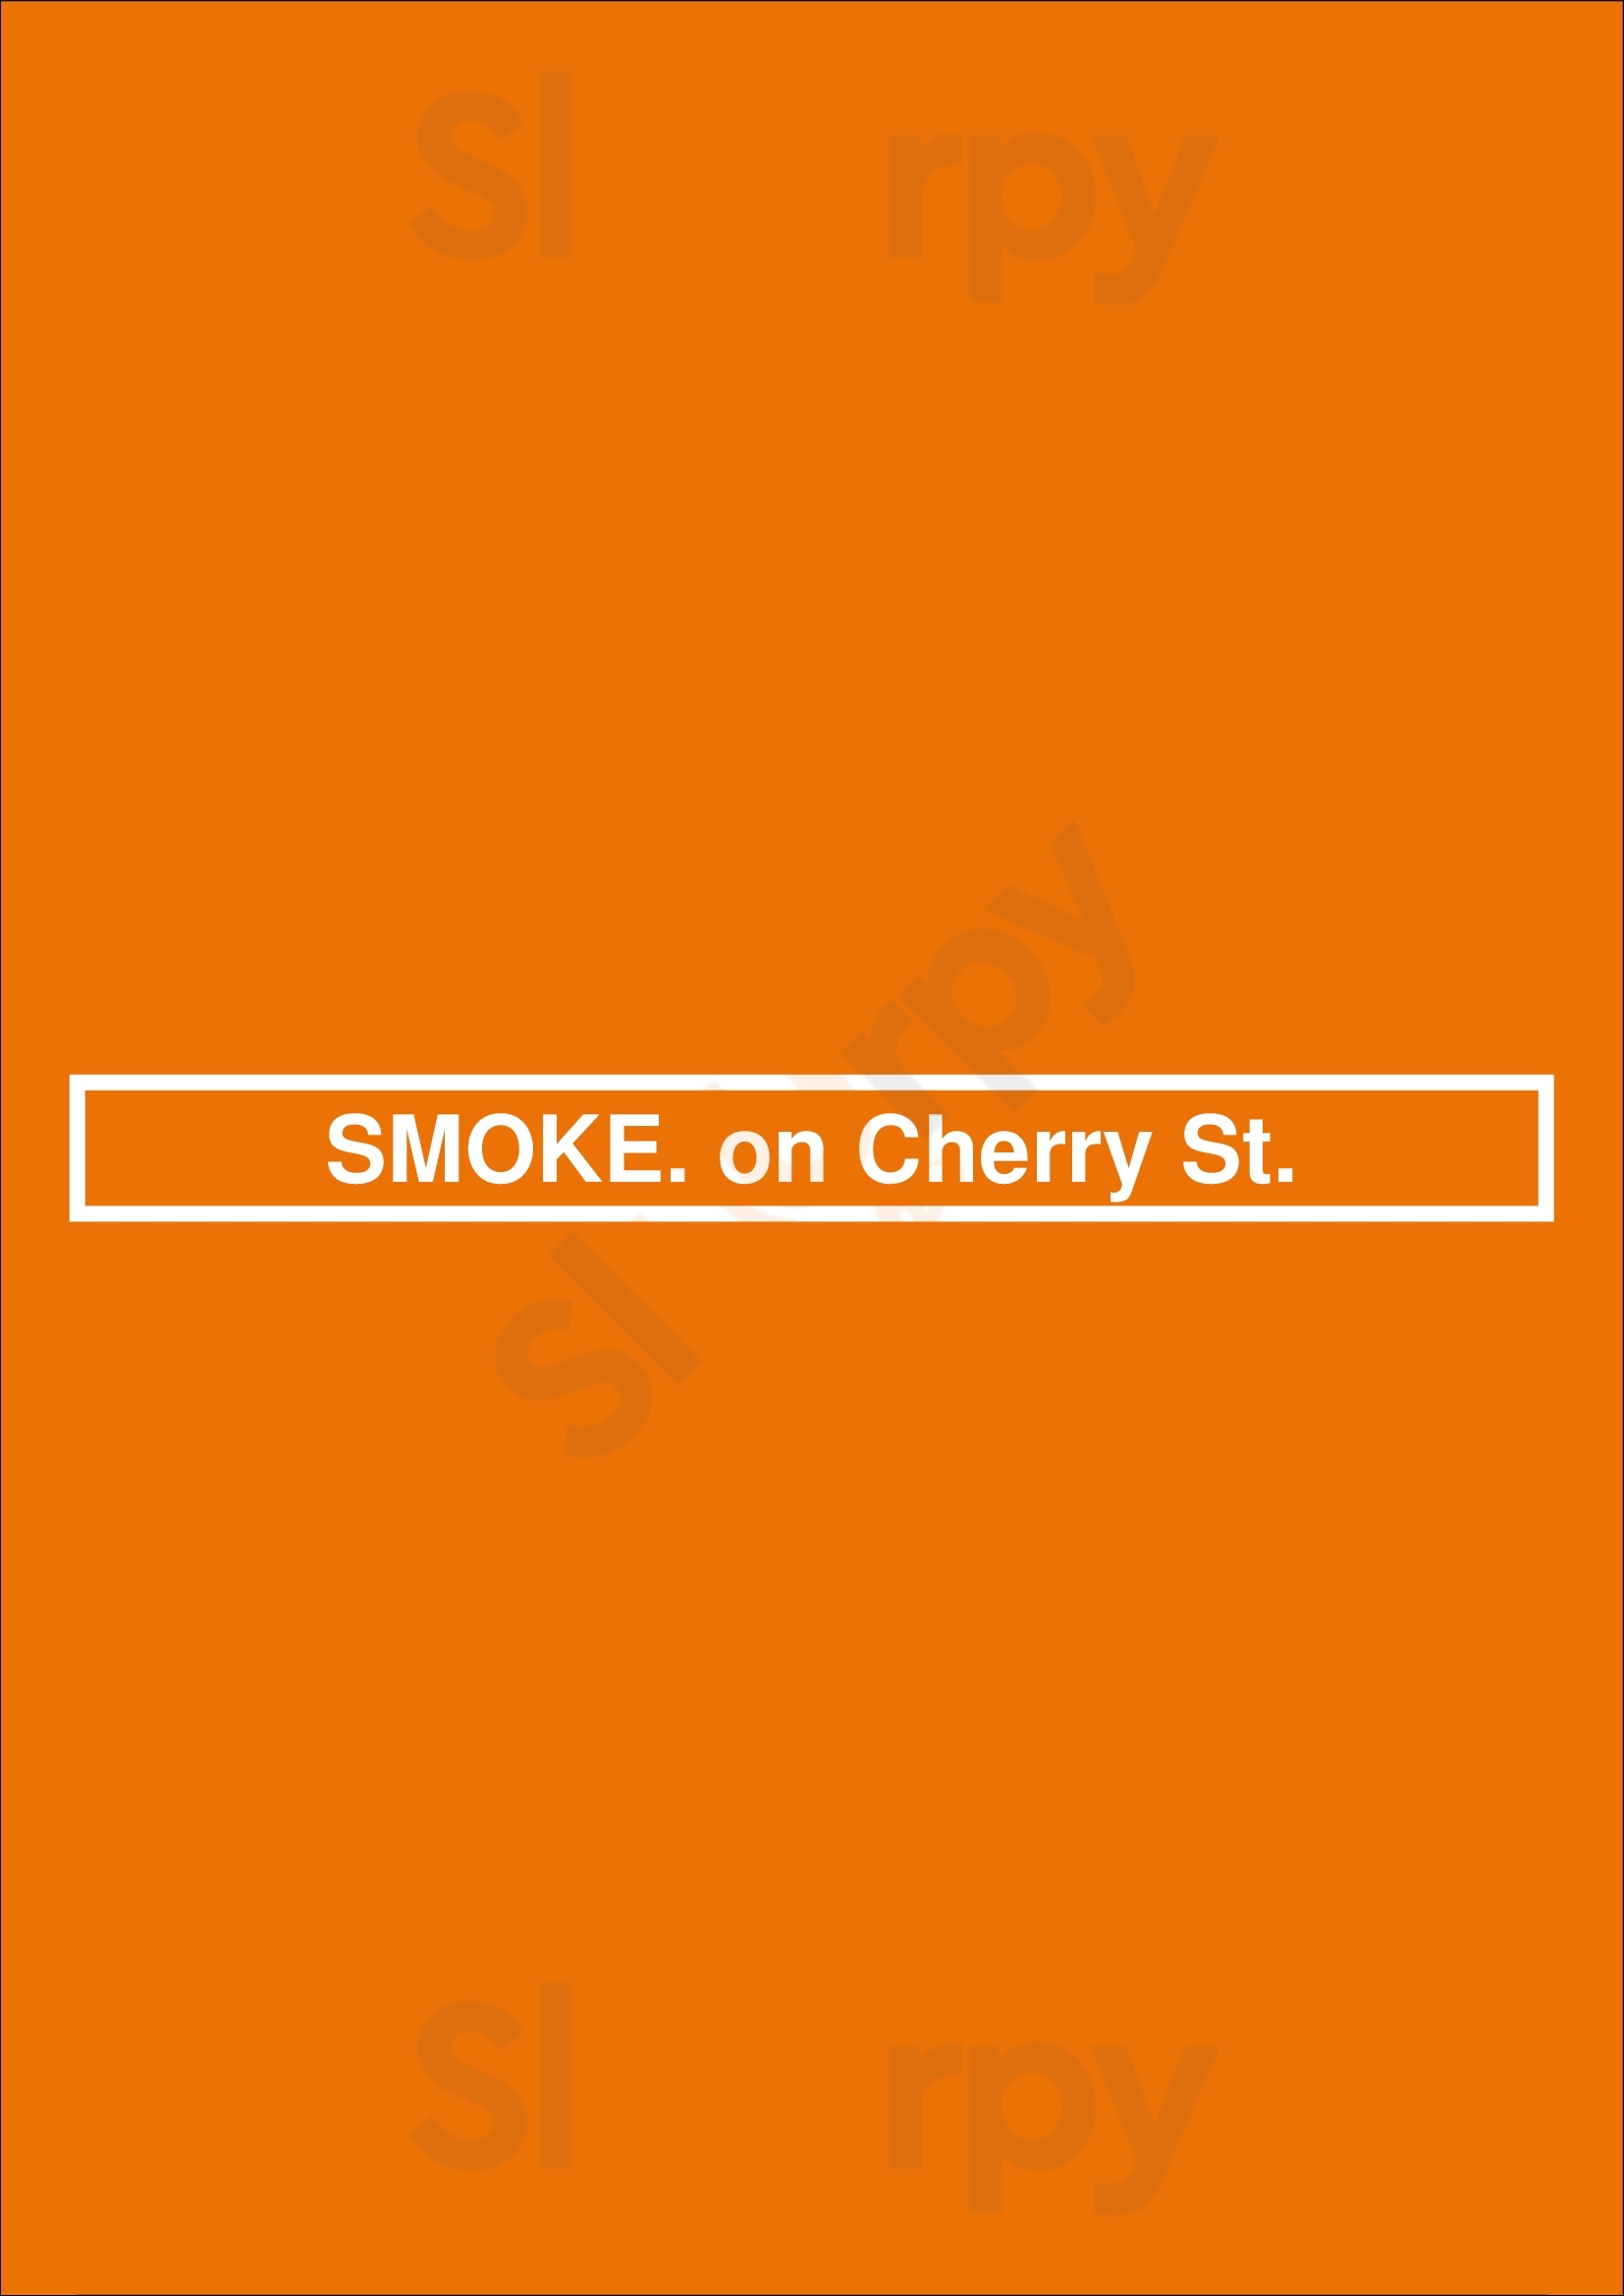 Smoke. On Cherry St. Tulsa Menu - 1